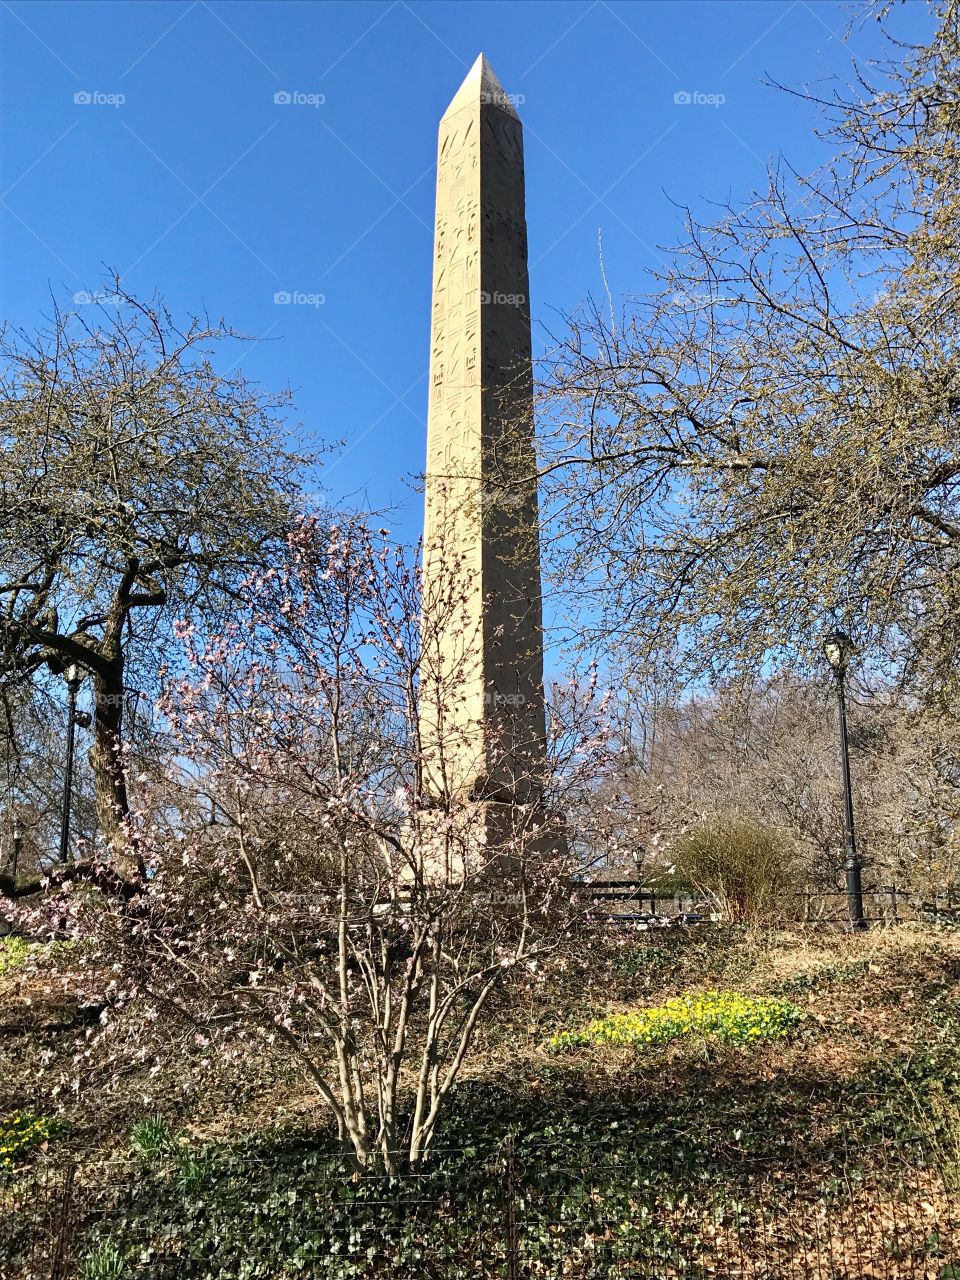 Egyptian Obelisk in Central Park, NYC 